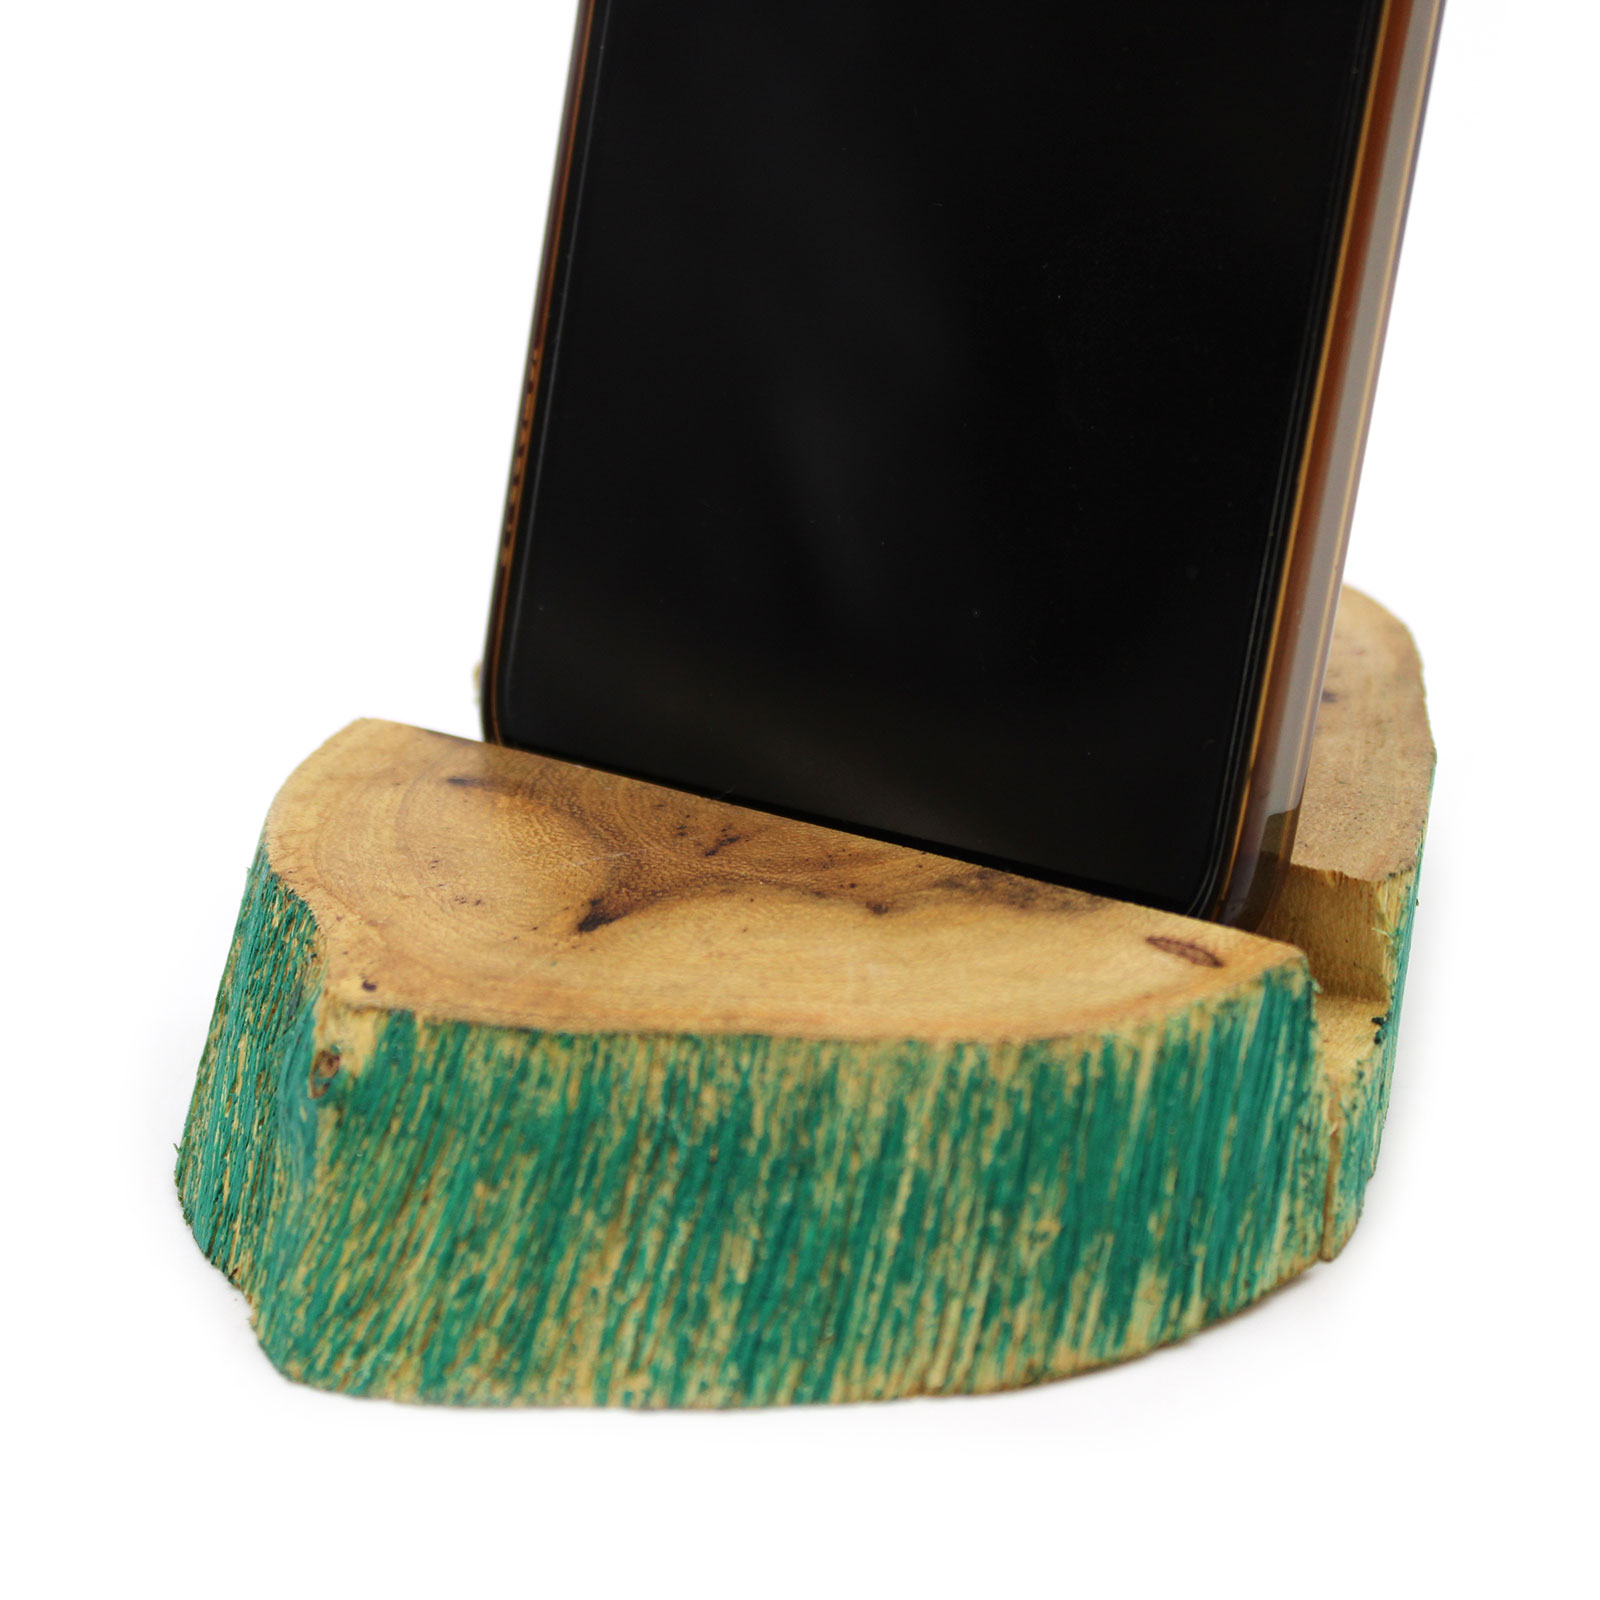 Lrg Gamal Wood Phone Holder - Greenwash